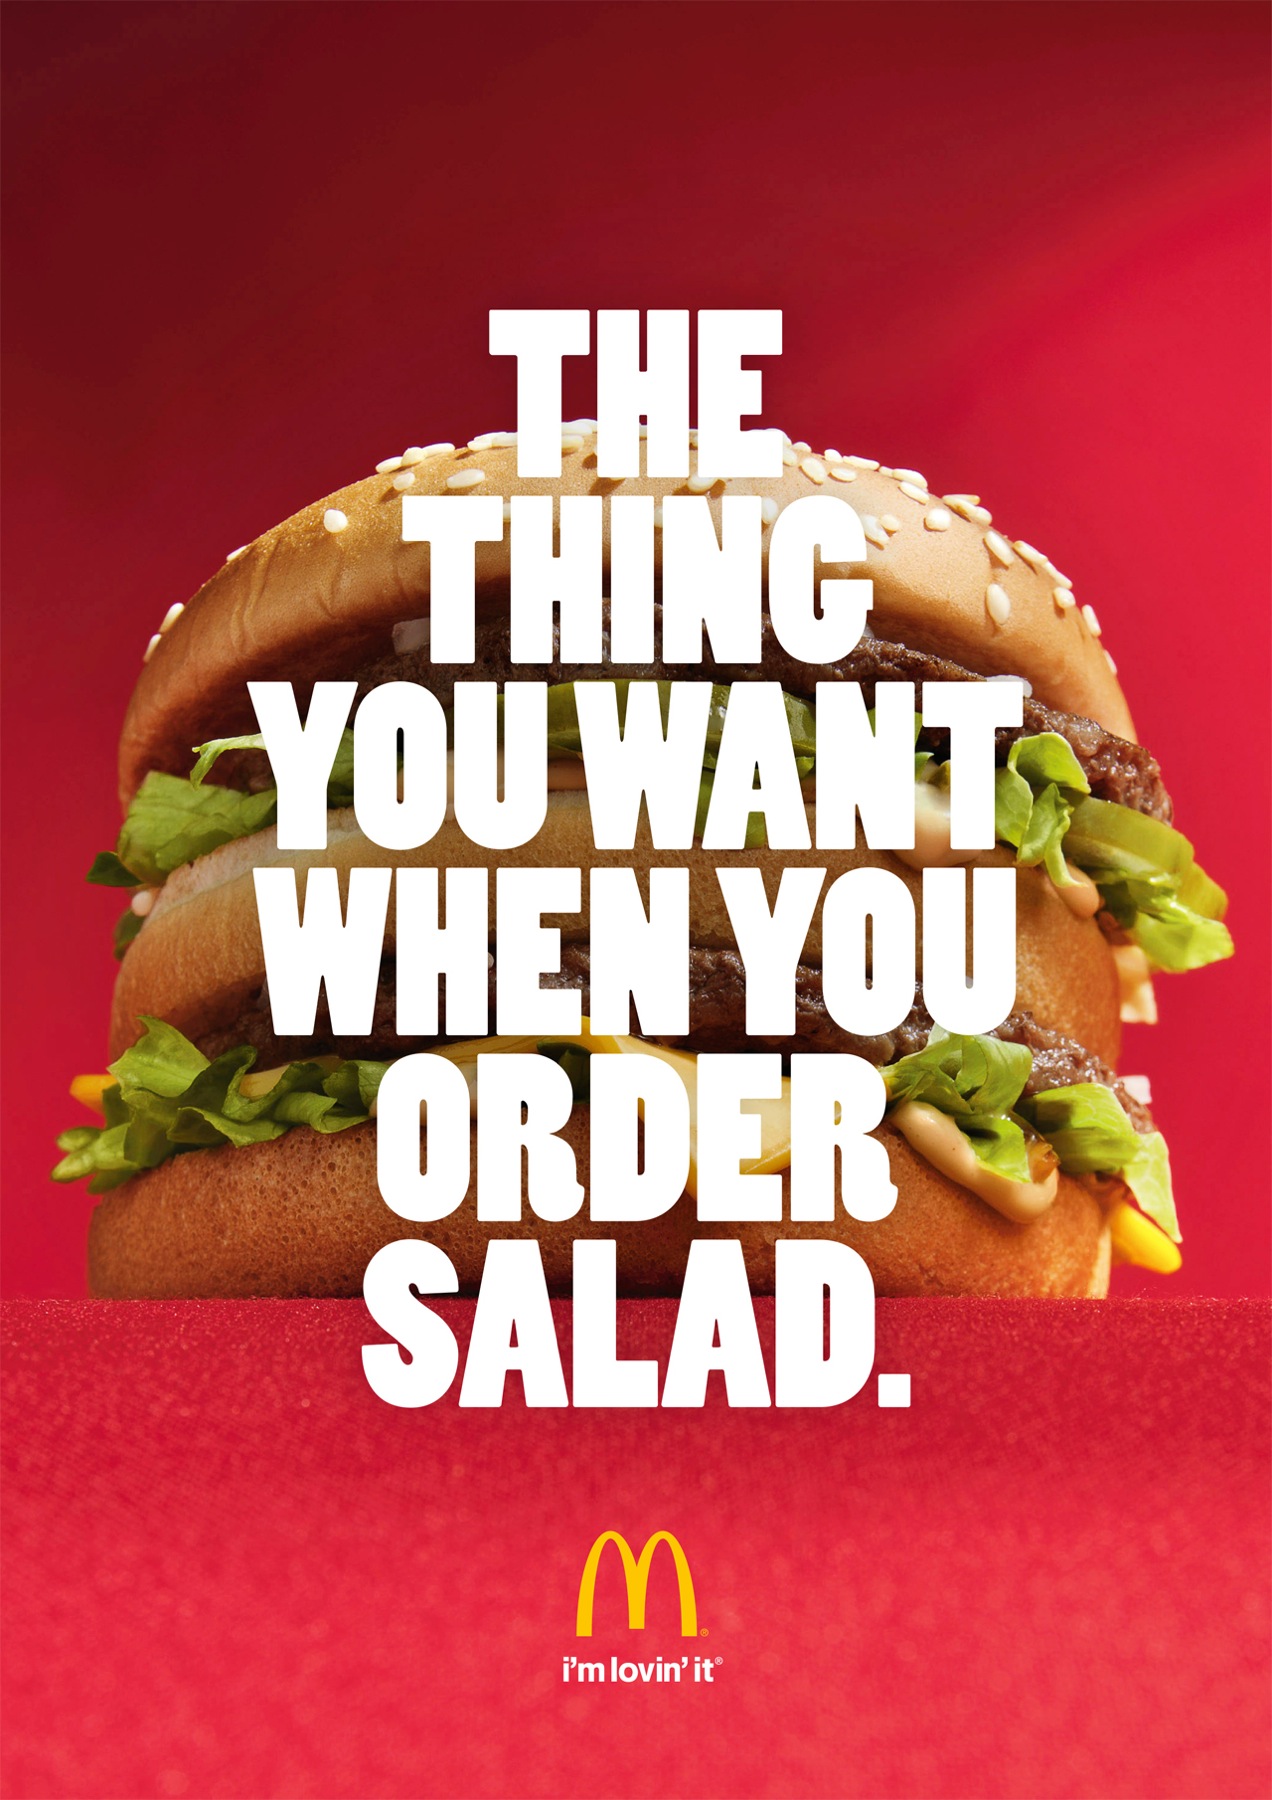 Mcdonalds print ad salad | GR8 MARKETING IDEAS